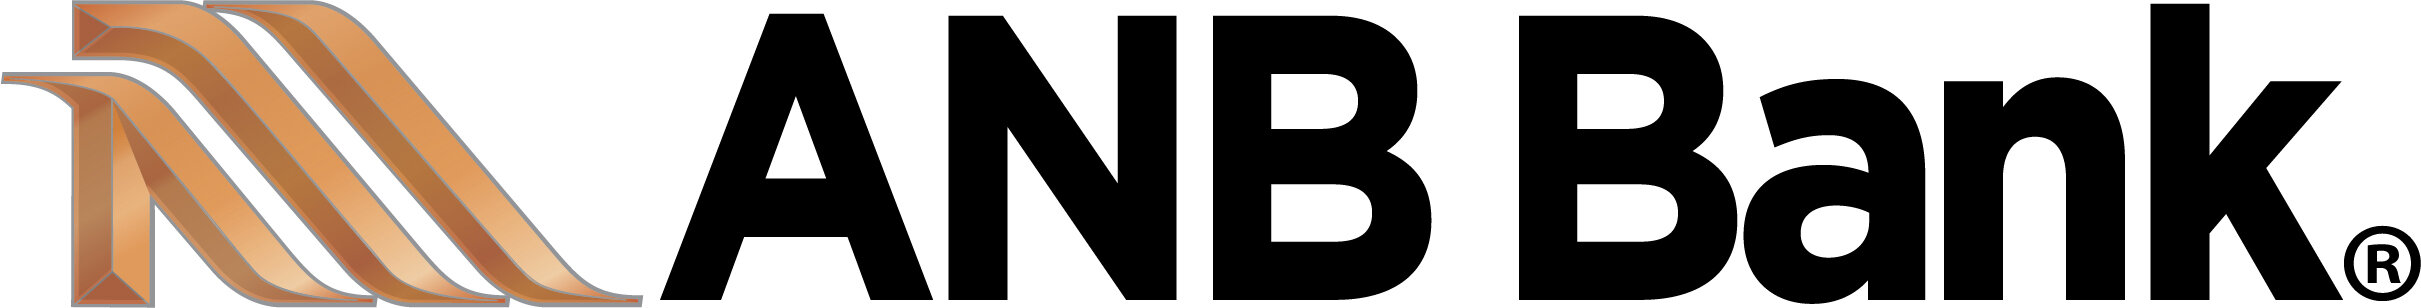 ANB Bank logo color_2019.jpg